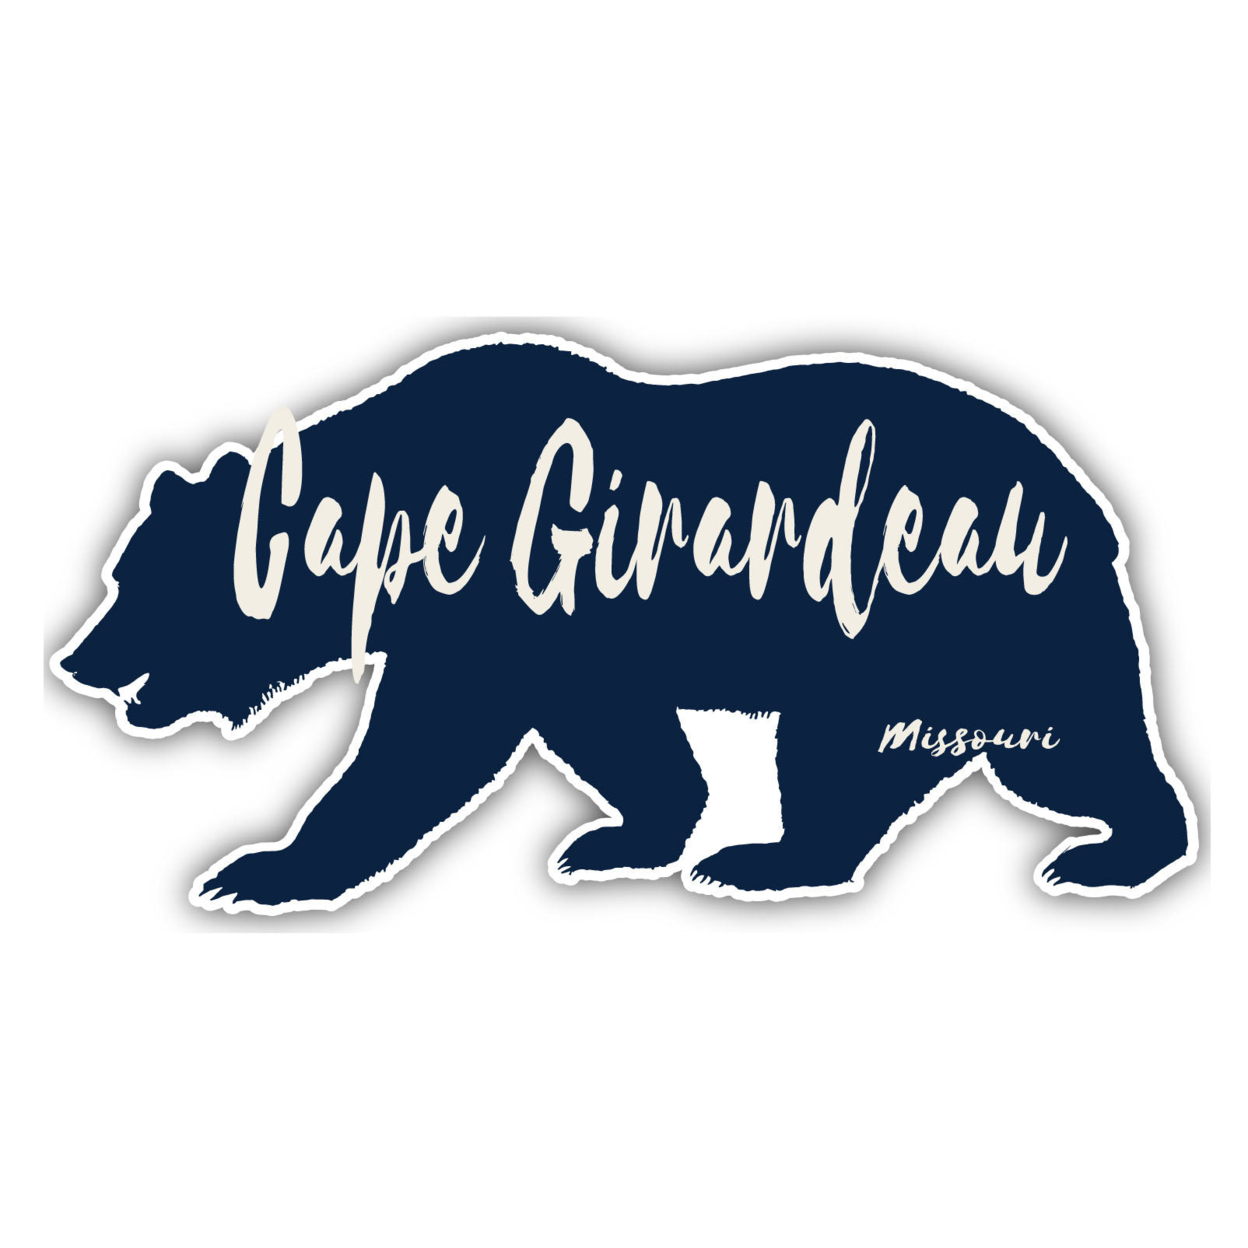 Cape Girardeau Missouri Souvenir Decorative Stickers (Choose Theme And Size) - 4-Pack, 4-Inch, Bear